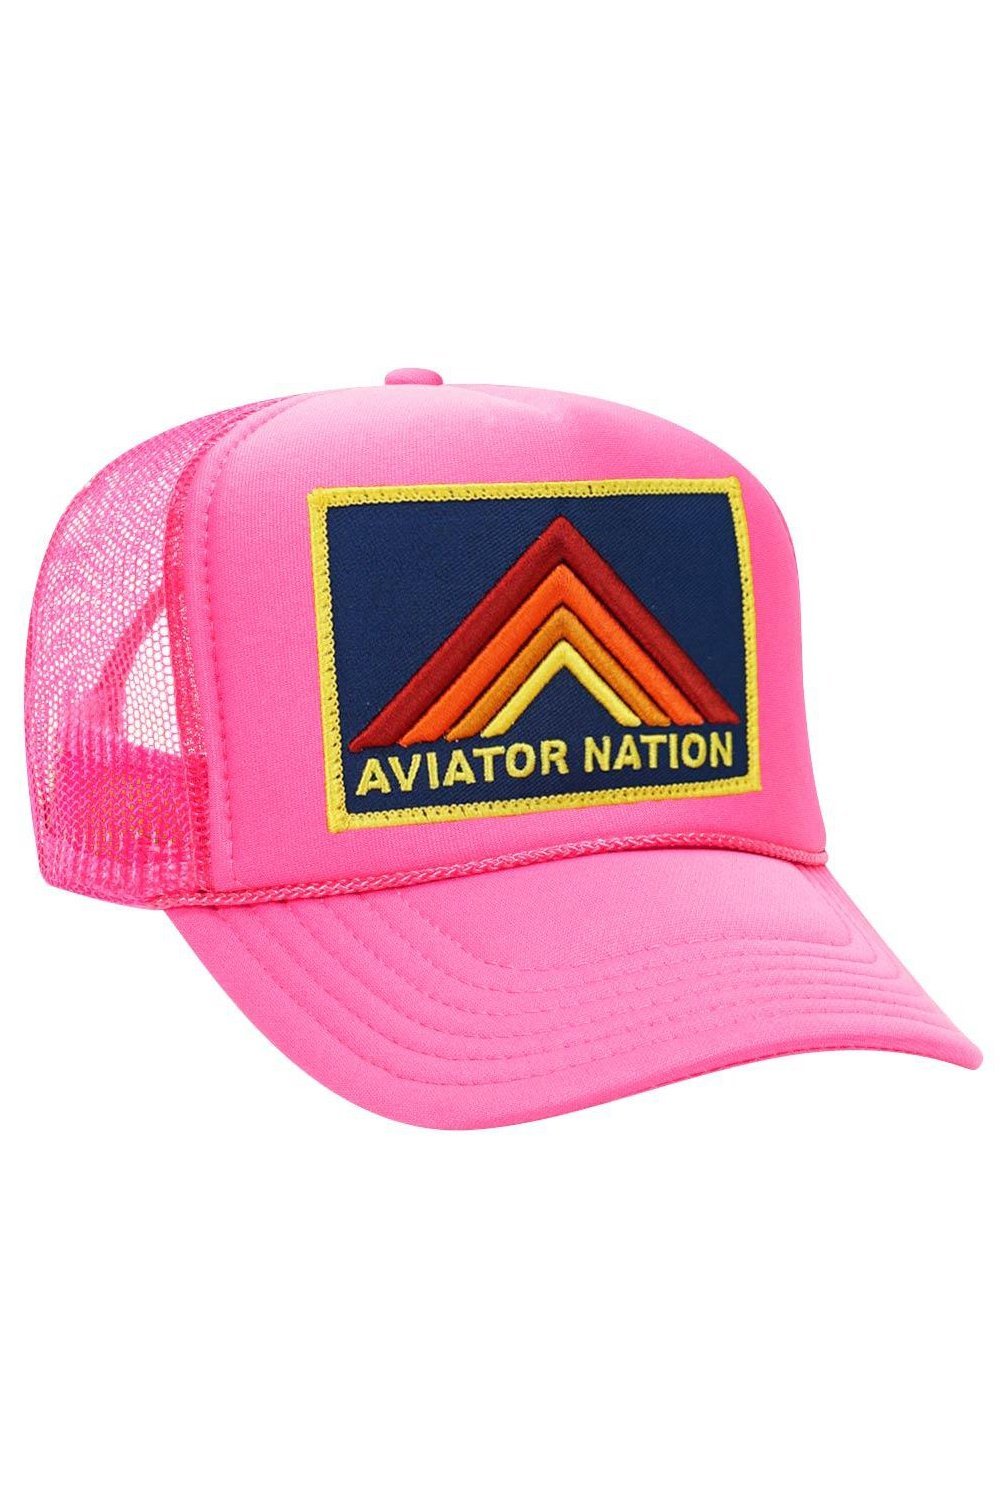 MOUNTAIN STRIPE VINTAGE TRUCKER HAT HATS Aviator Nation OS NEON PINK 